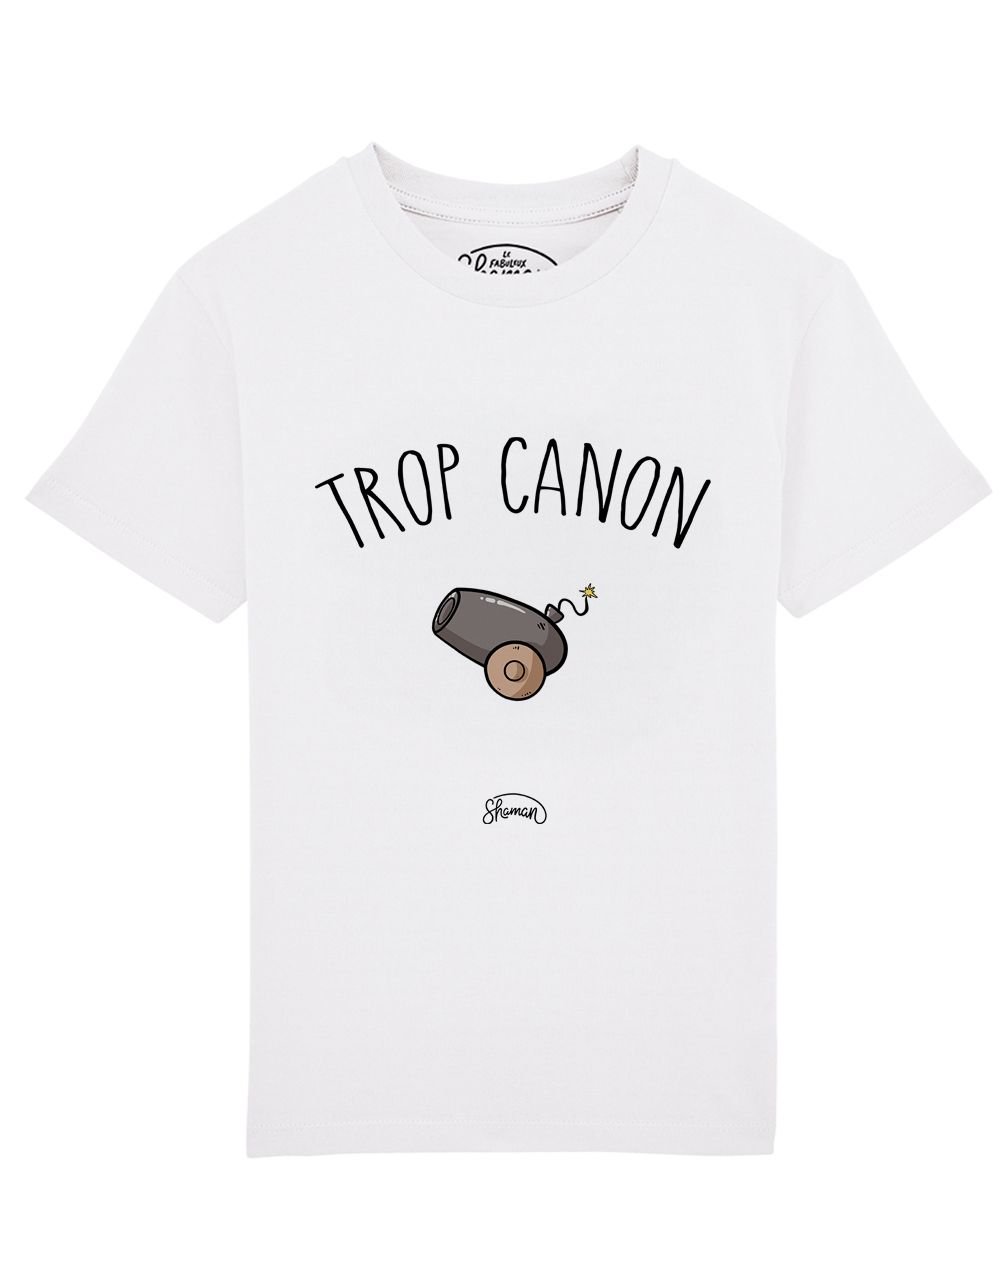 Tee shirt Trop canon